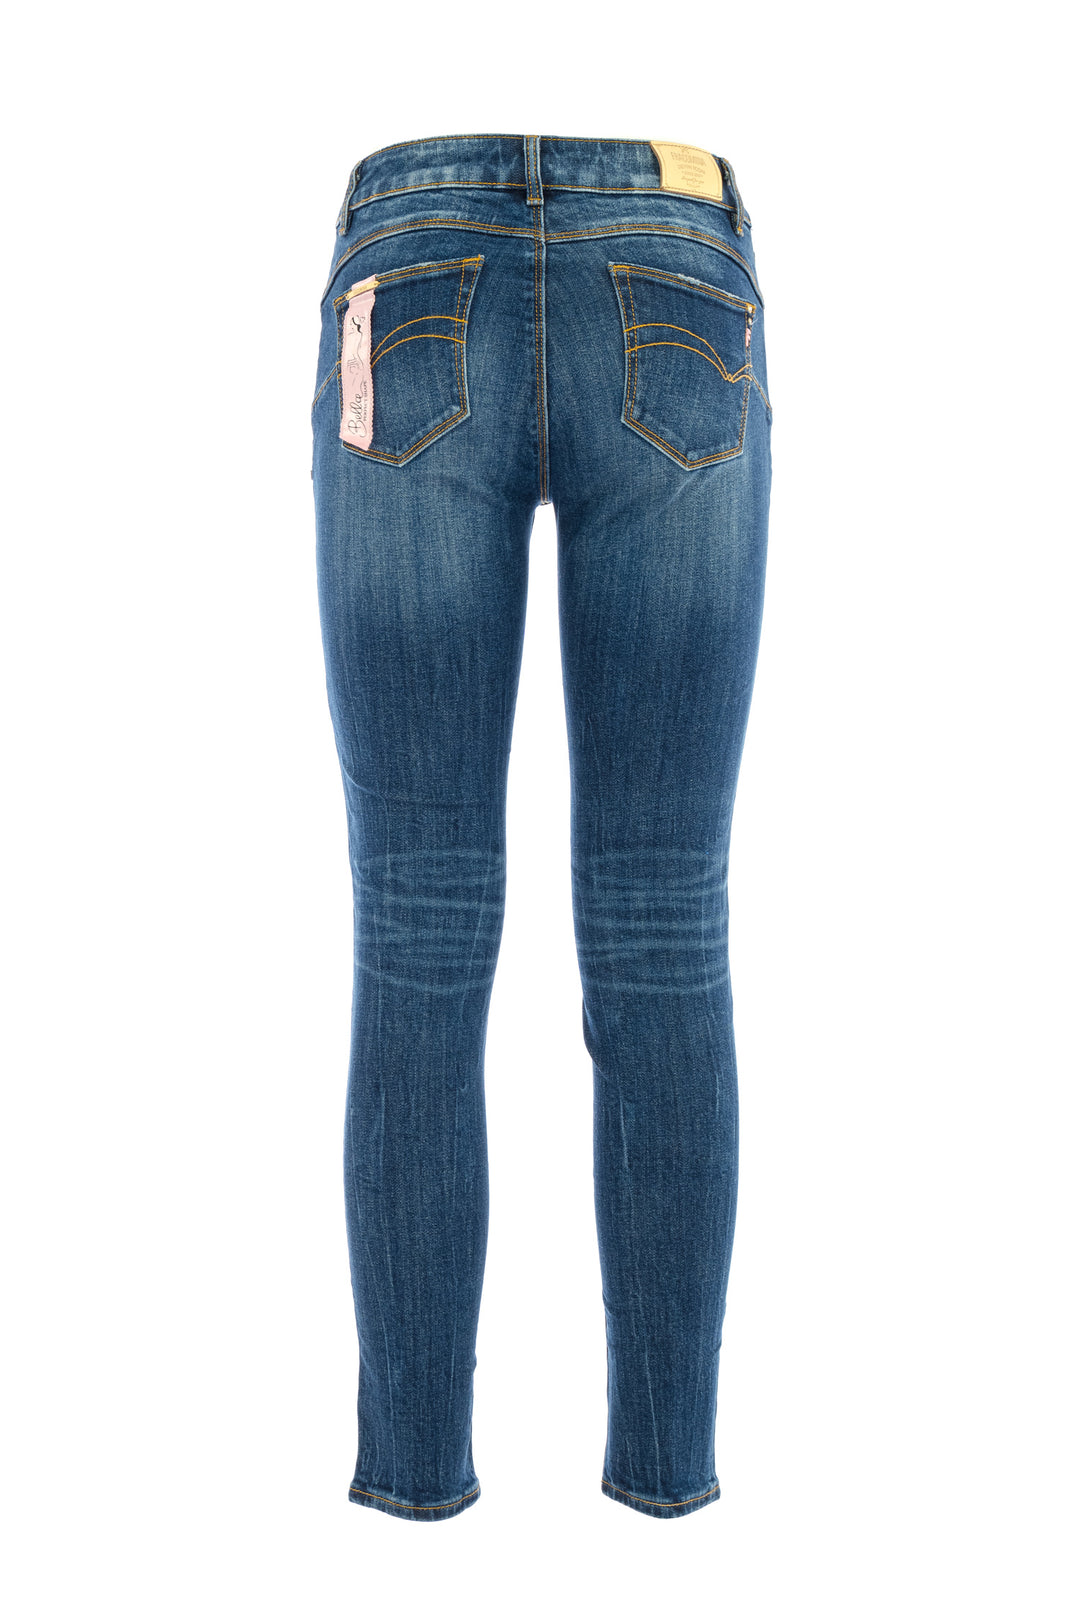 FRACOMINA Jeans Bella perfect shape bootcut STONE WASH - Mancinelli 1954